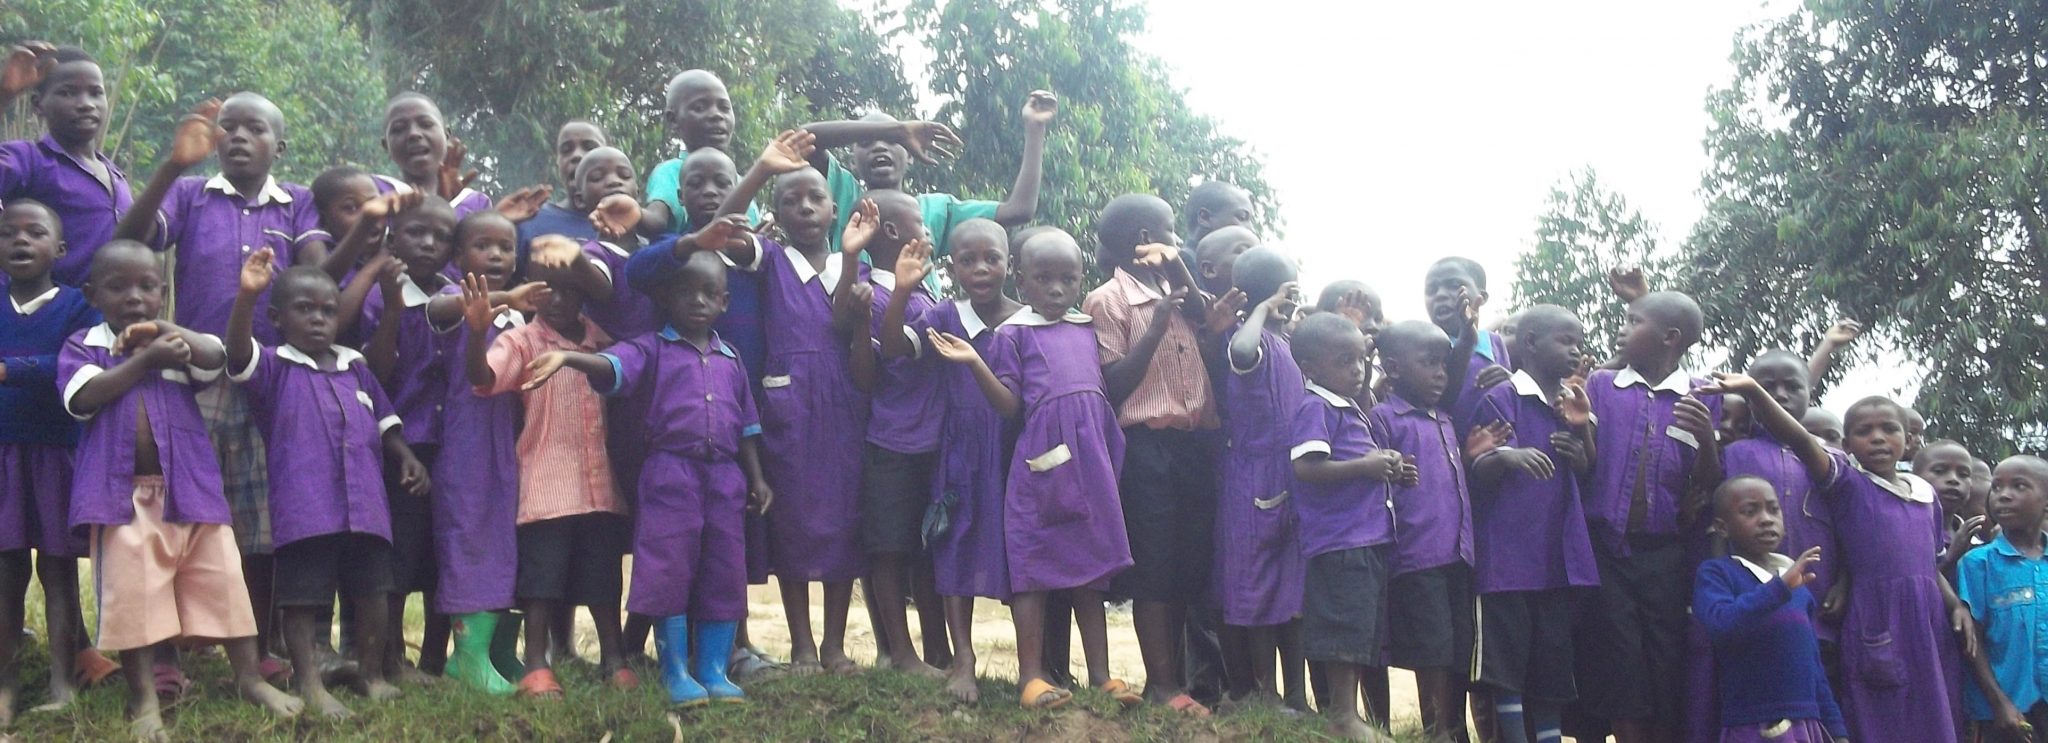 Many Africa children in school uniform